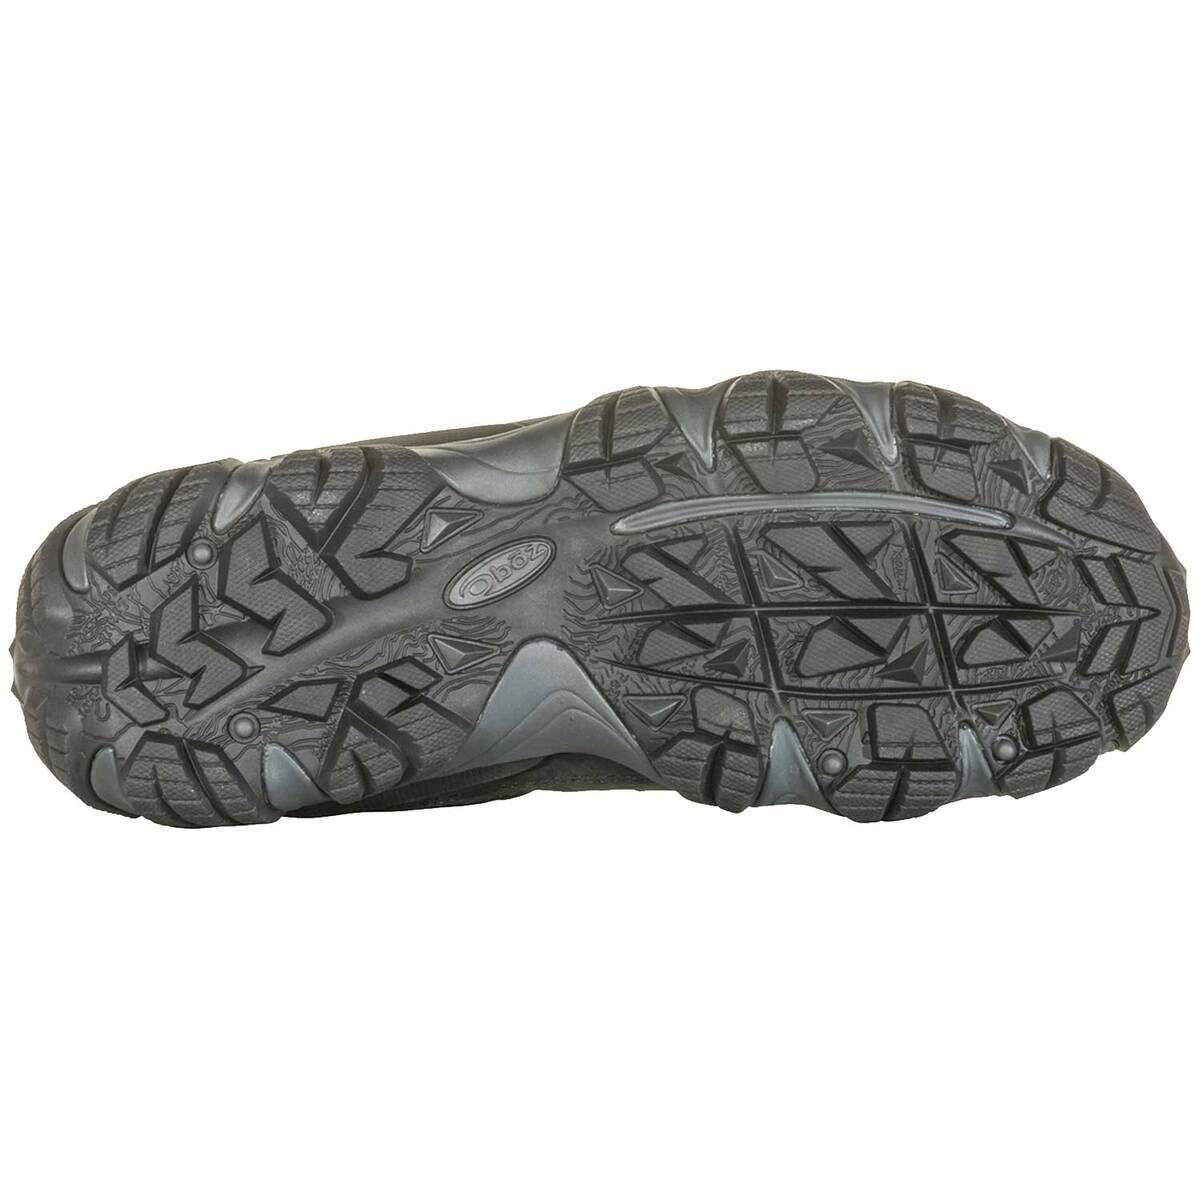 Oboz Men's Sawtooth II Waterproof Low Hiking Shoes - Shadow Bur - 13 ...